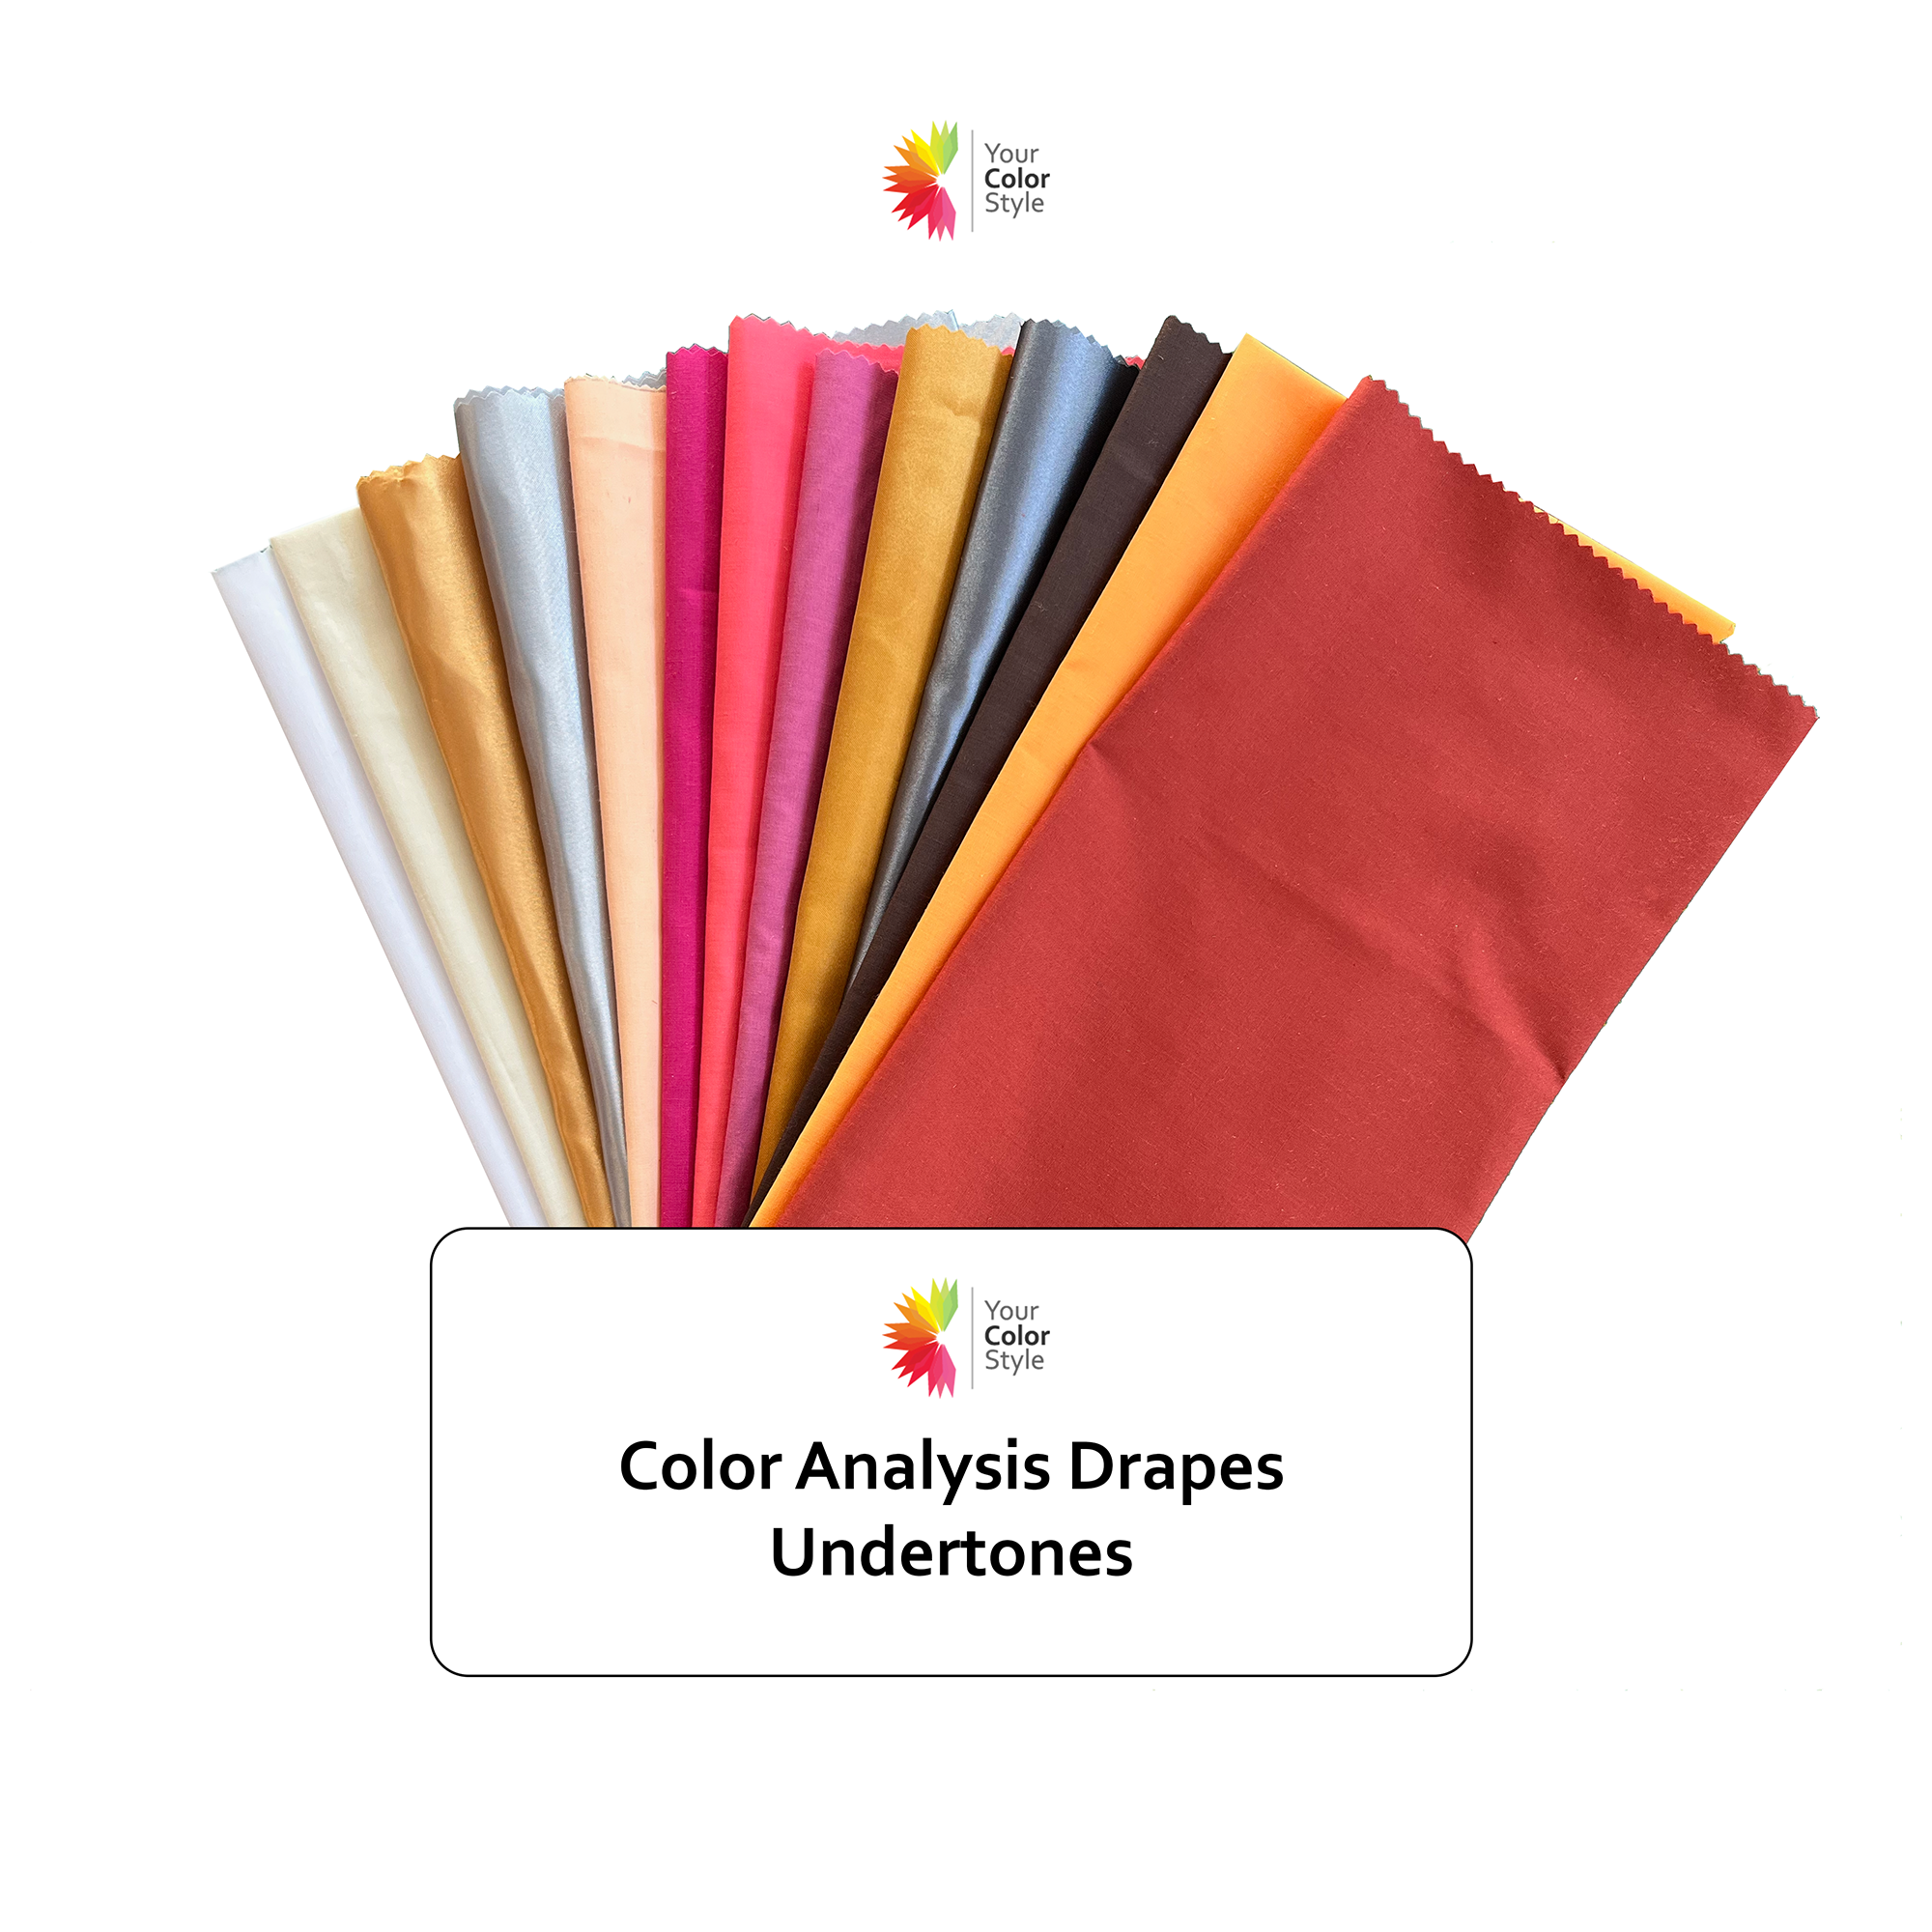 Color Analysis Drapes Set - Find Your Undertones